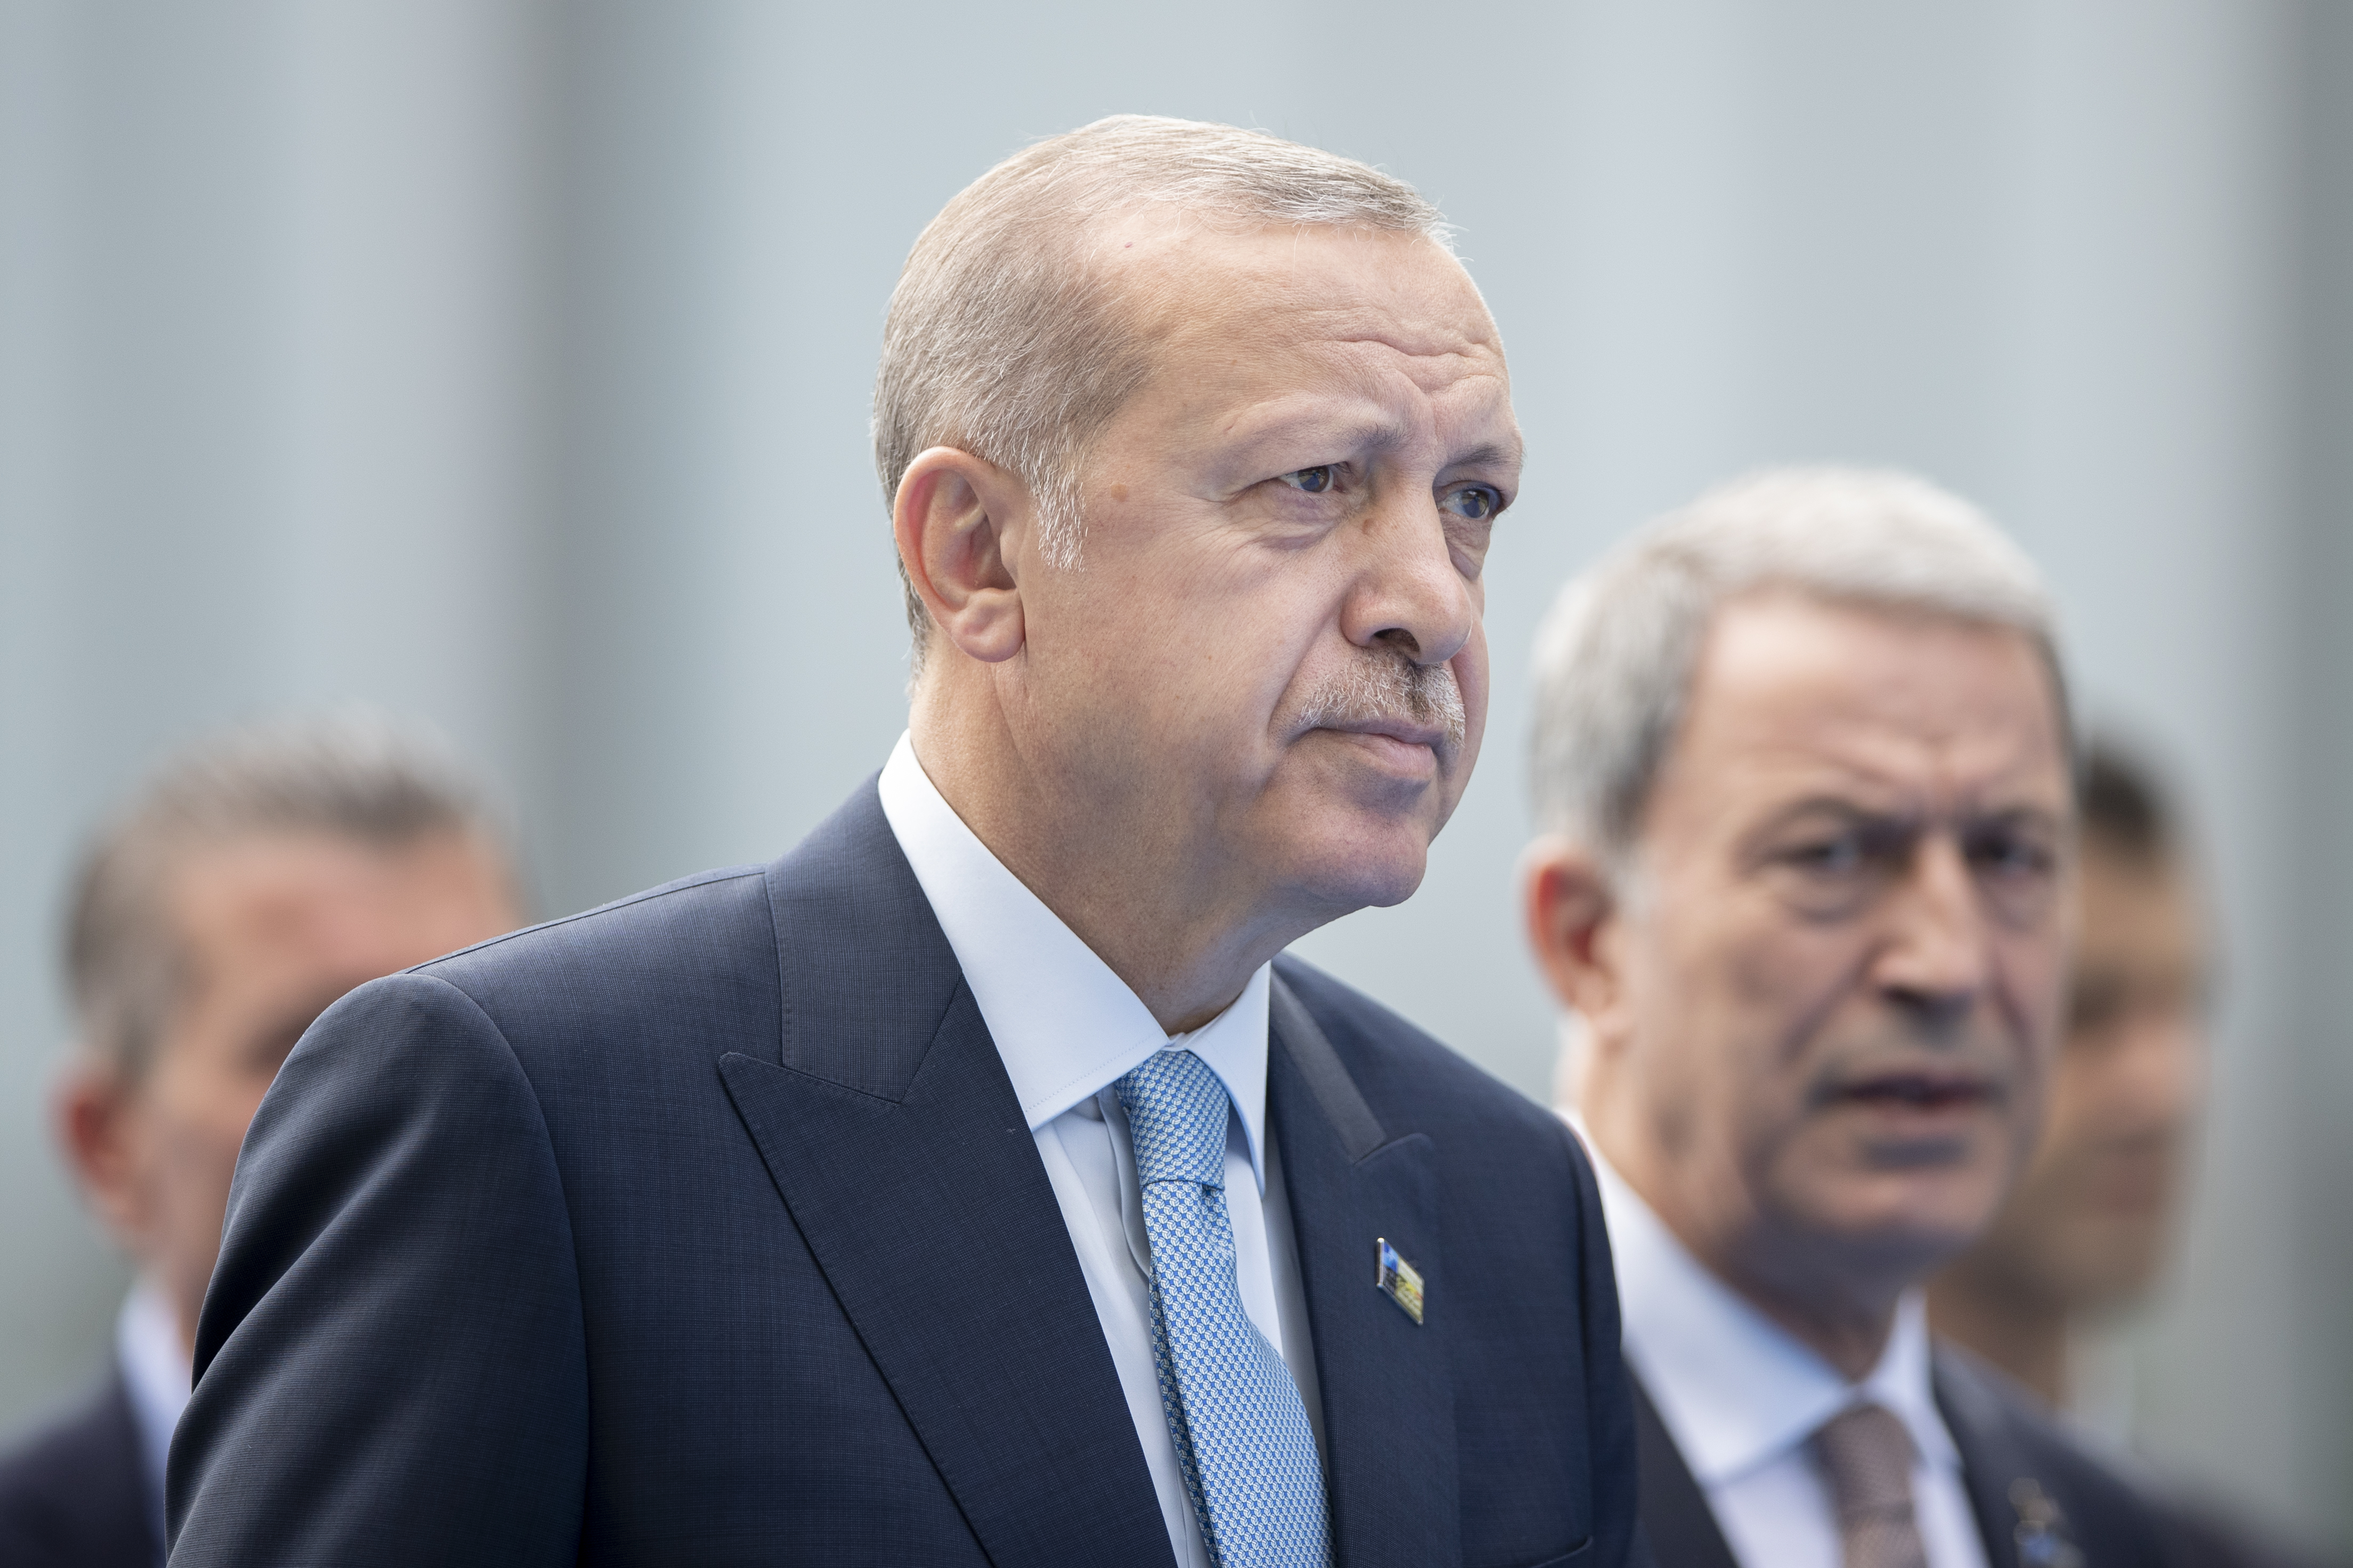 Turkish President Recep Tayyip Erdogan arrives at the 2018 NATO Summit at NATO headquarters on July 12, 2018 in Brussels, Belgium. (Jasper Juinen—Getty Images)